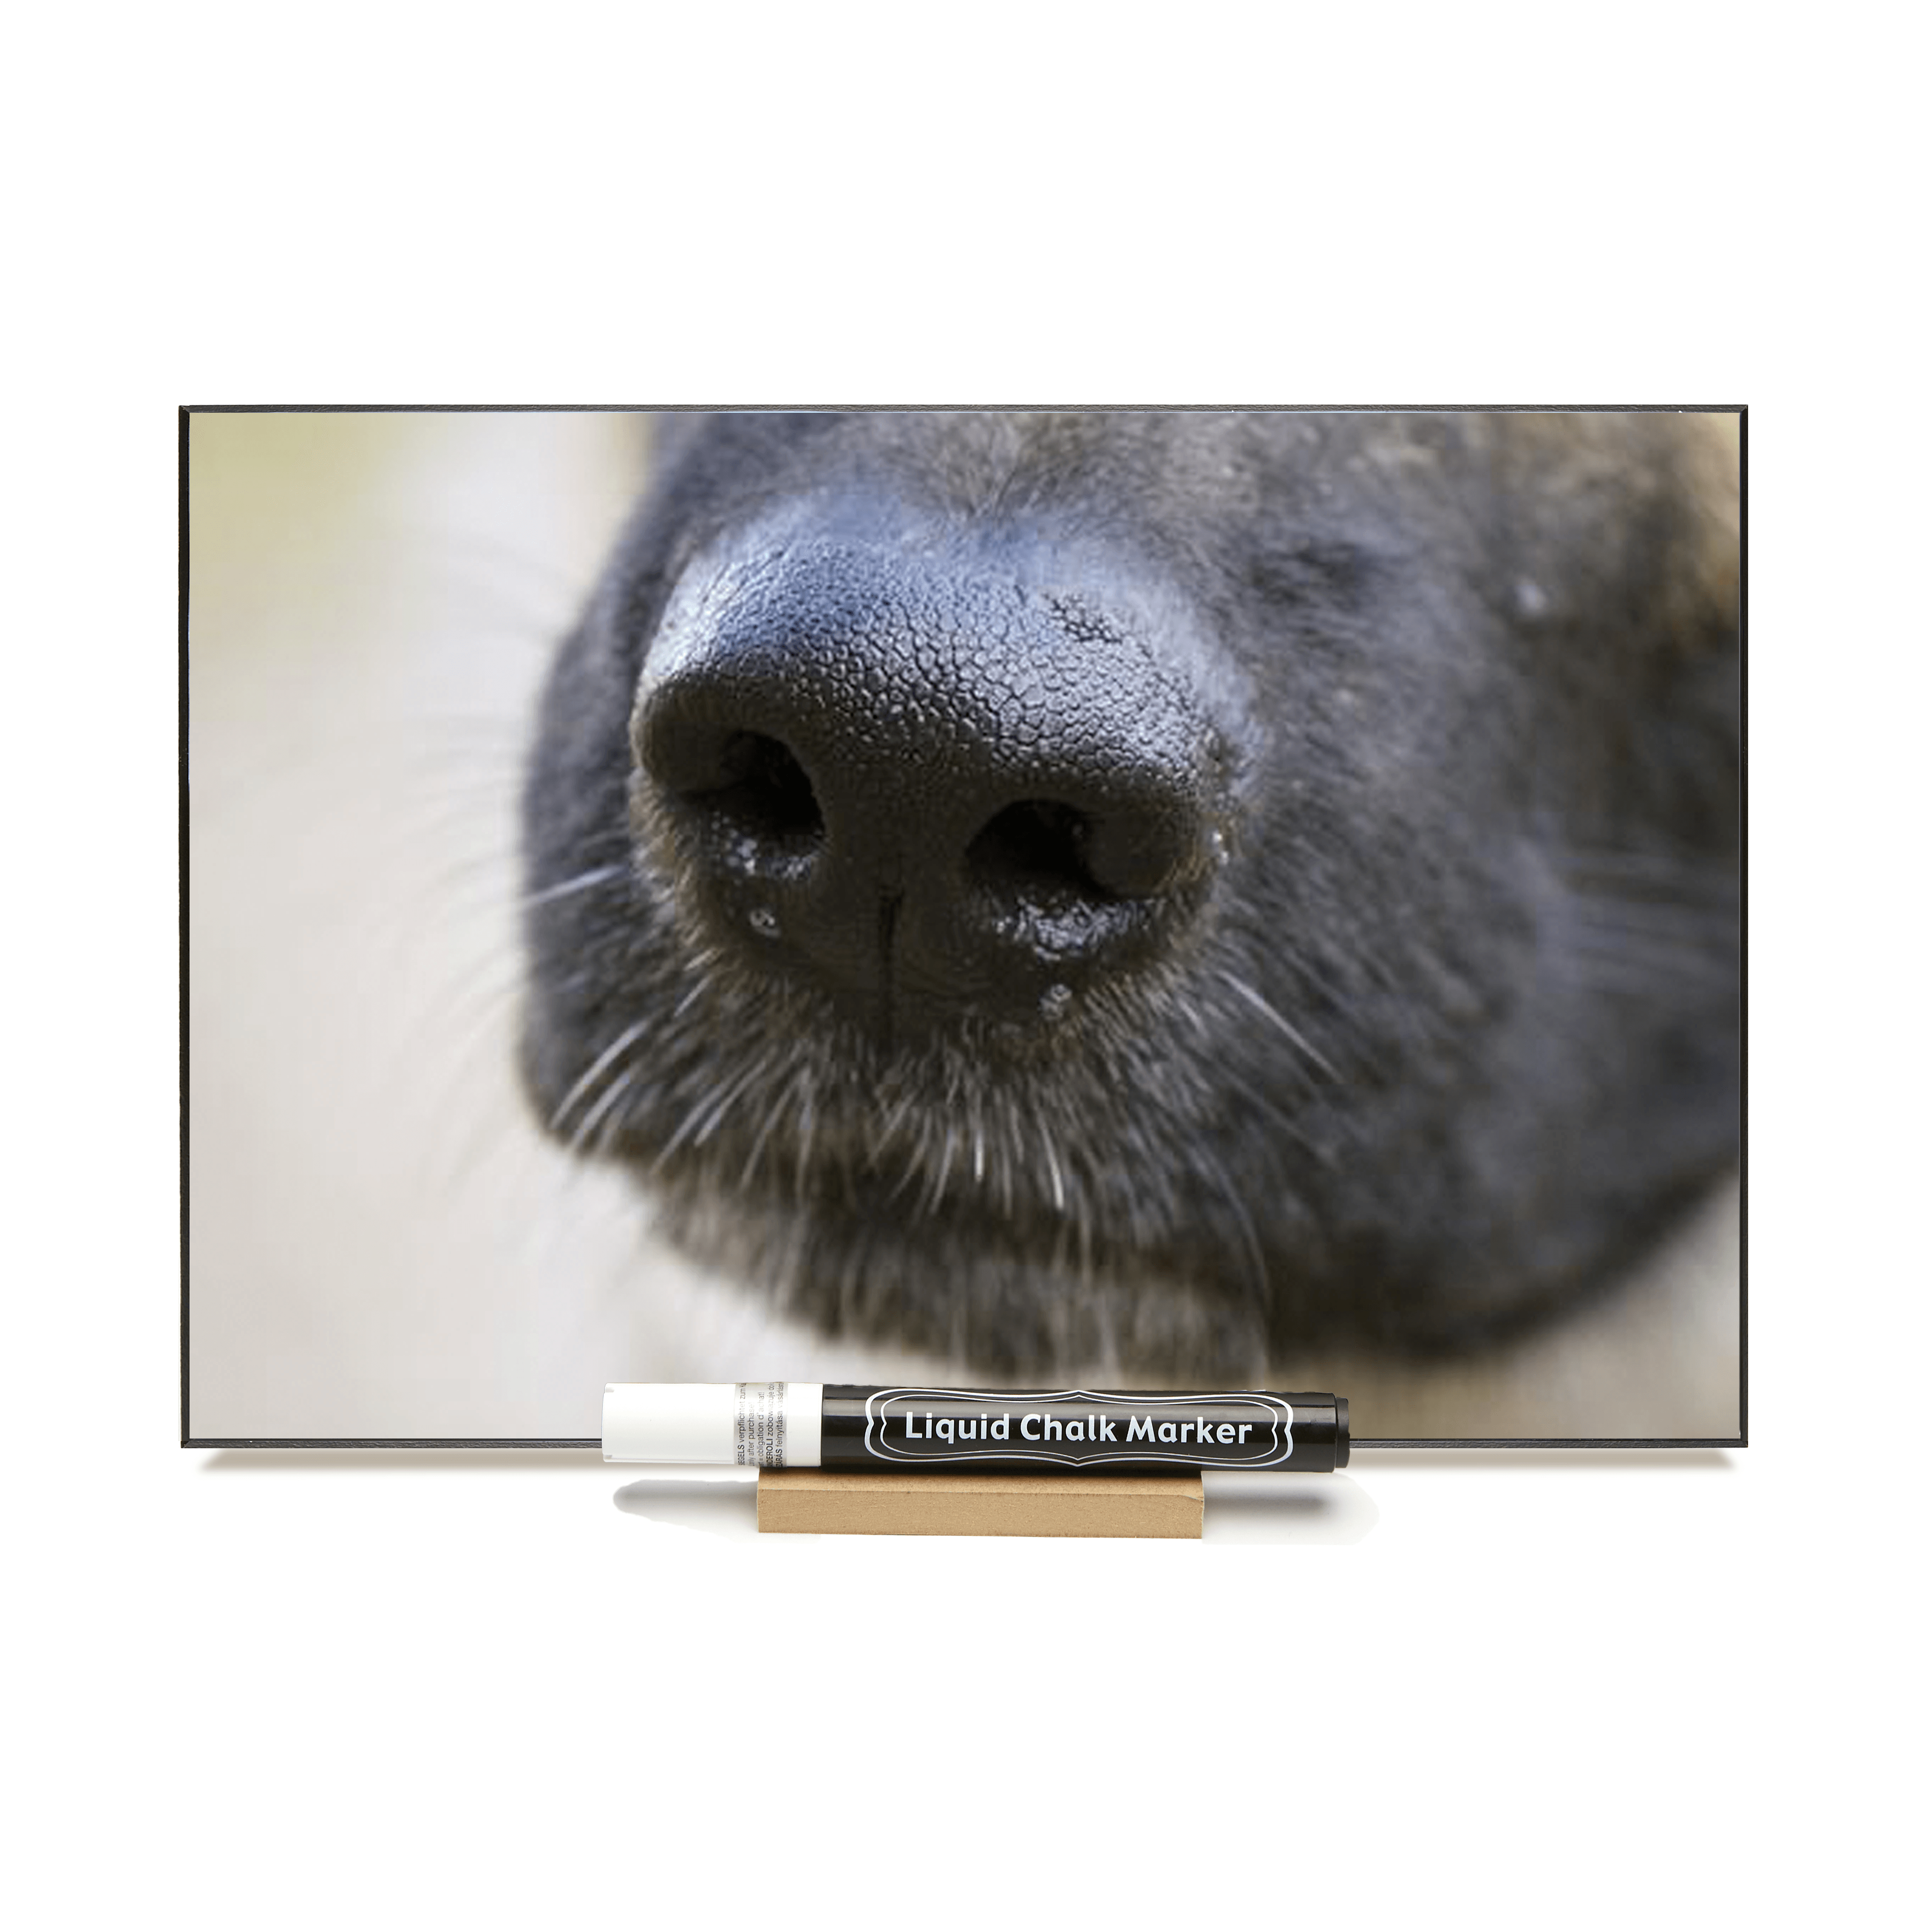 "Dog Black Nose"  PHOTO CHALKBOARD  Includes Chalkboard, Chalk Marker and Stand